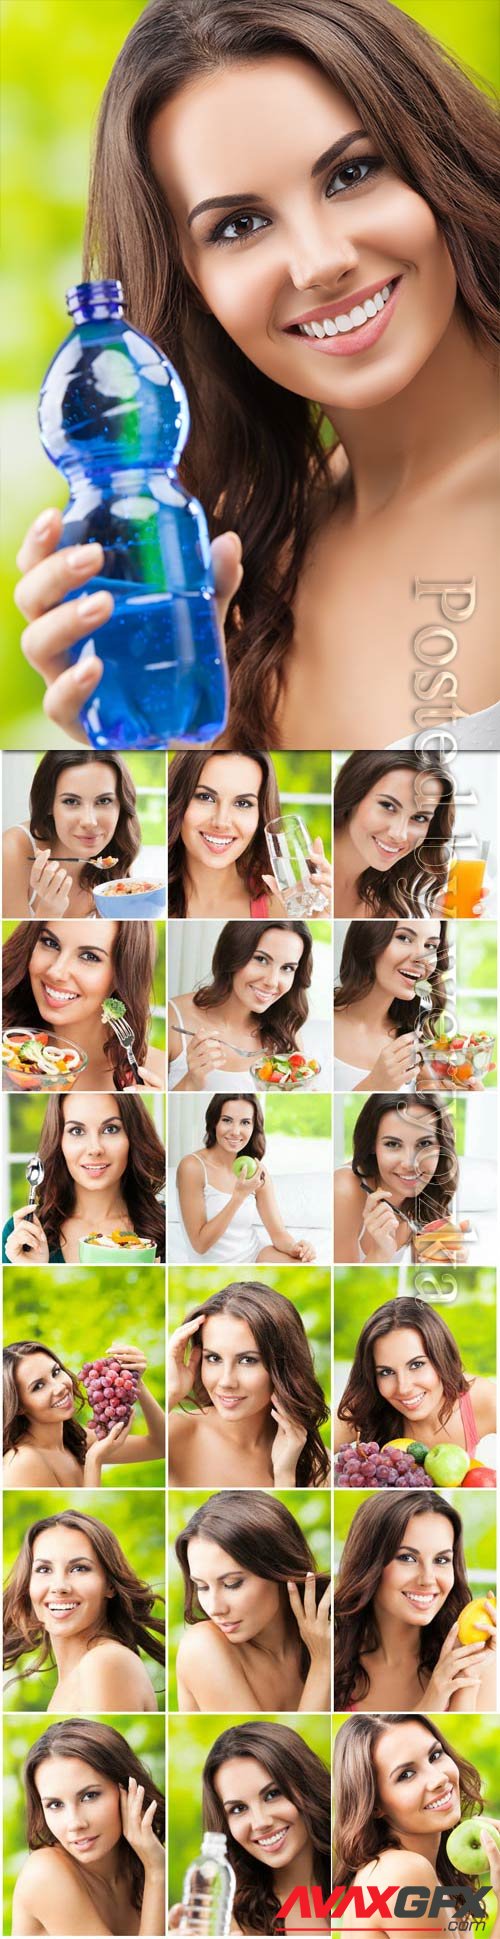 Girl promoting healthy food stock photo